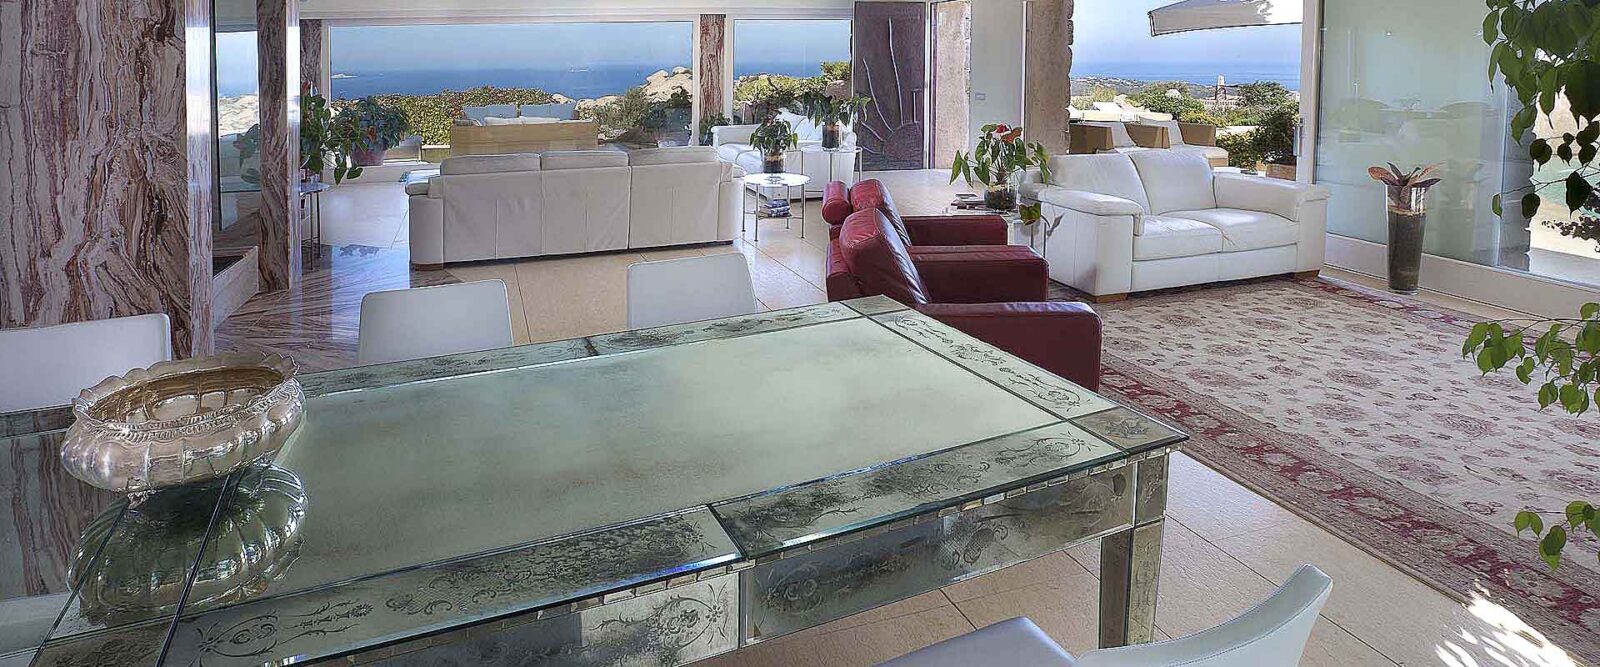 Luxury-Villa-Portocervo-Sardinia-Italy-rent-sale-8